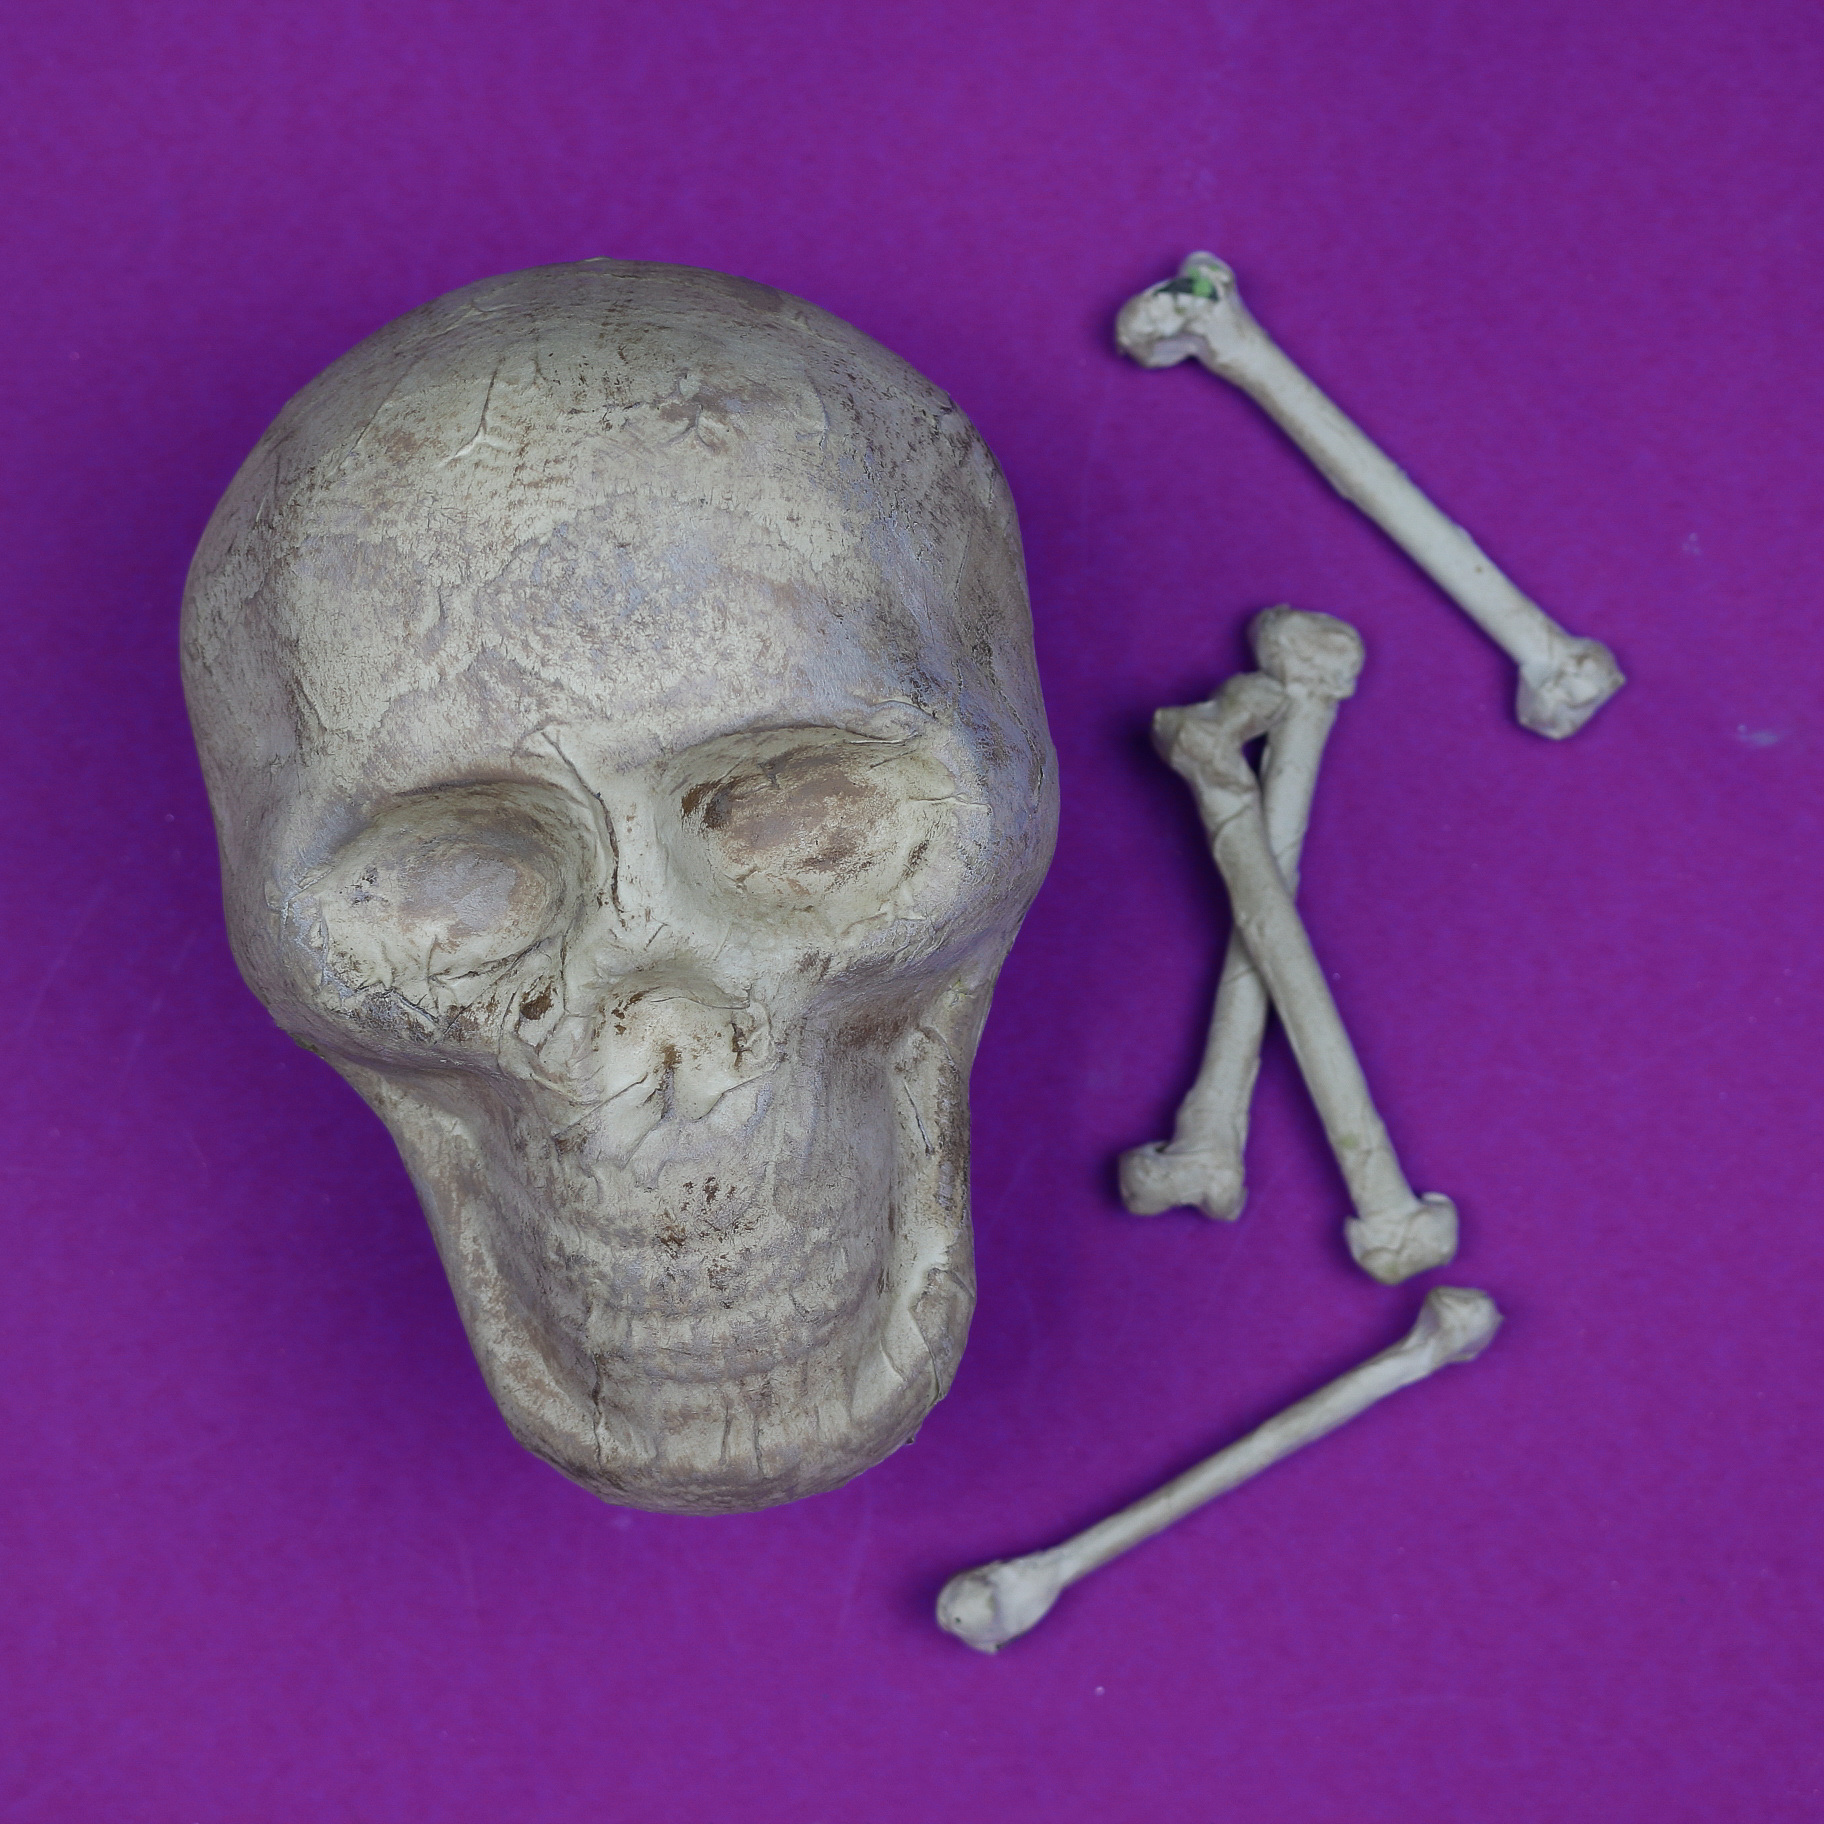 aged halloween skull and bones